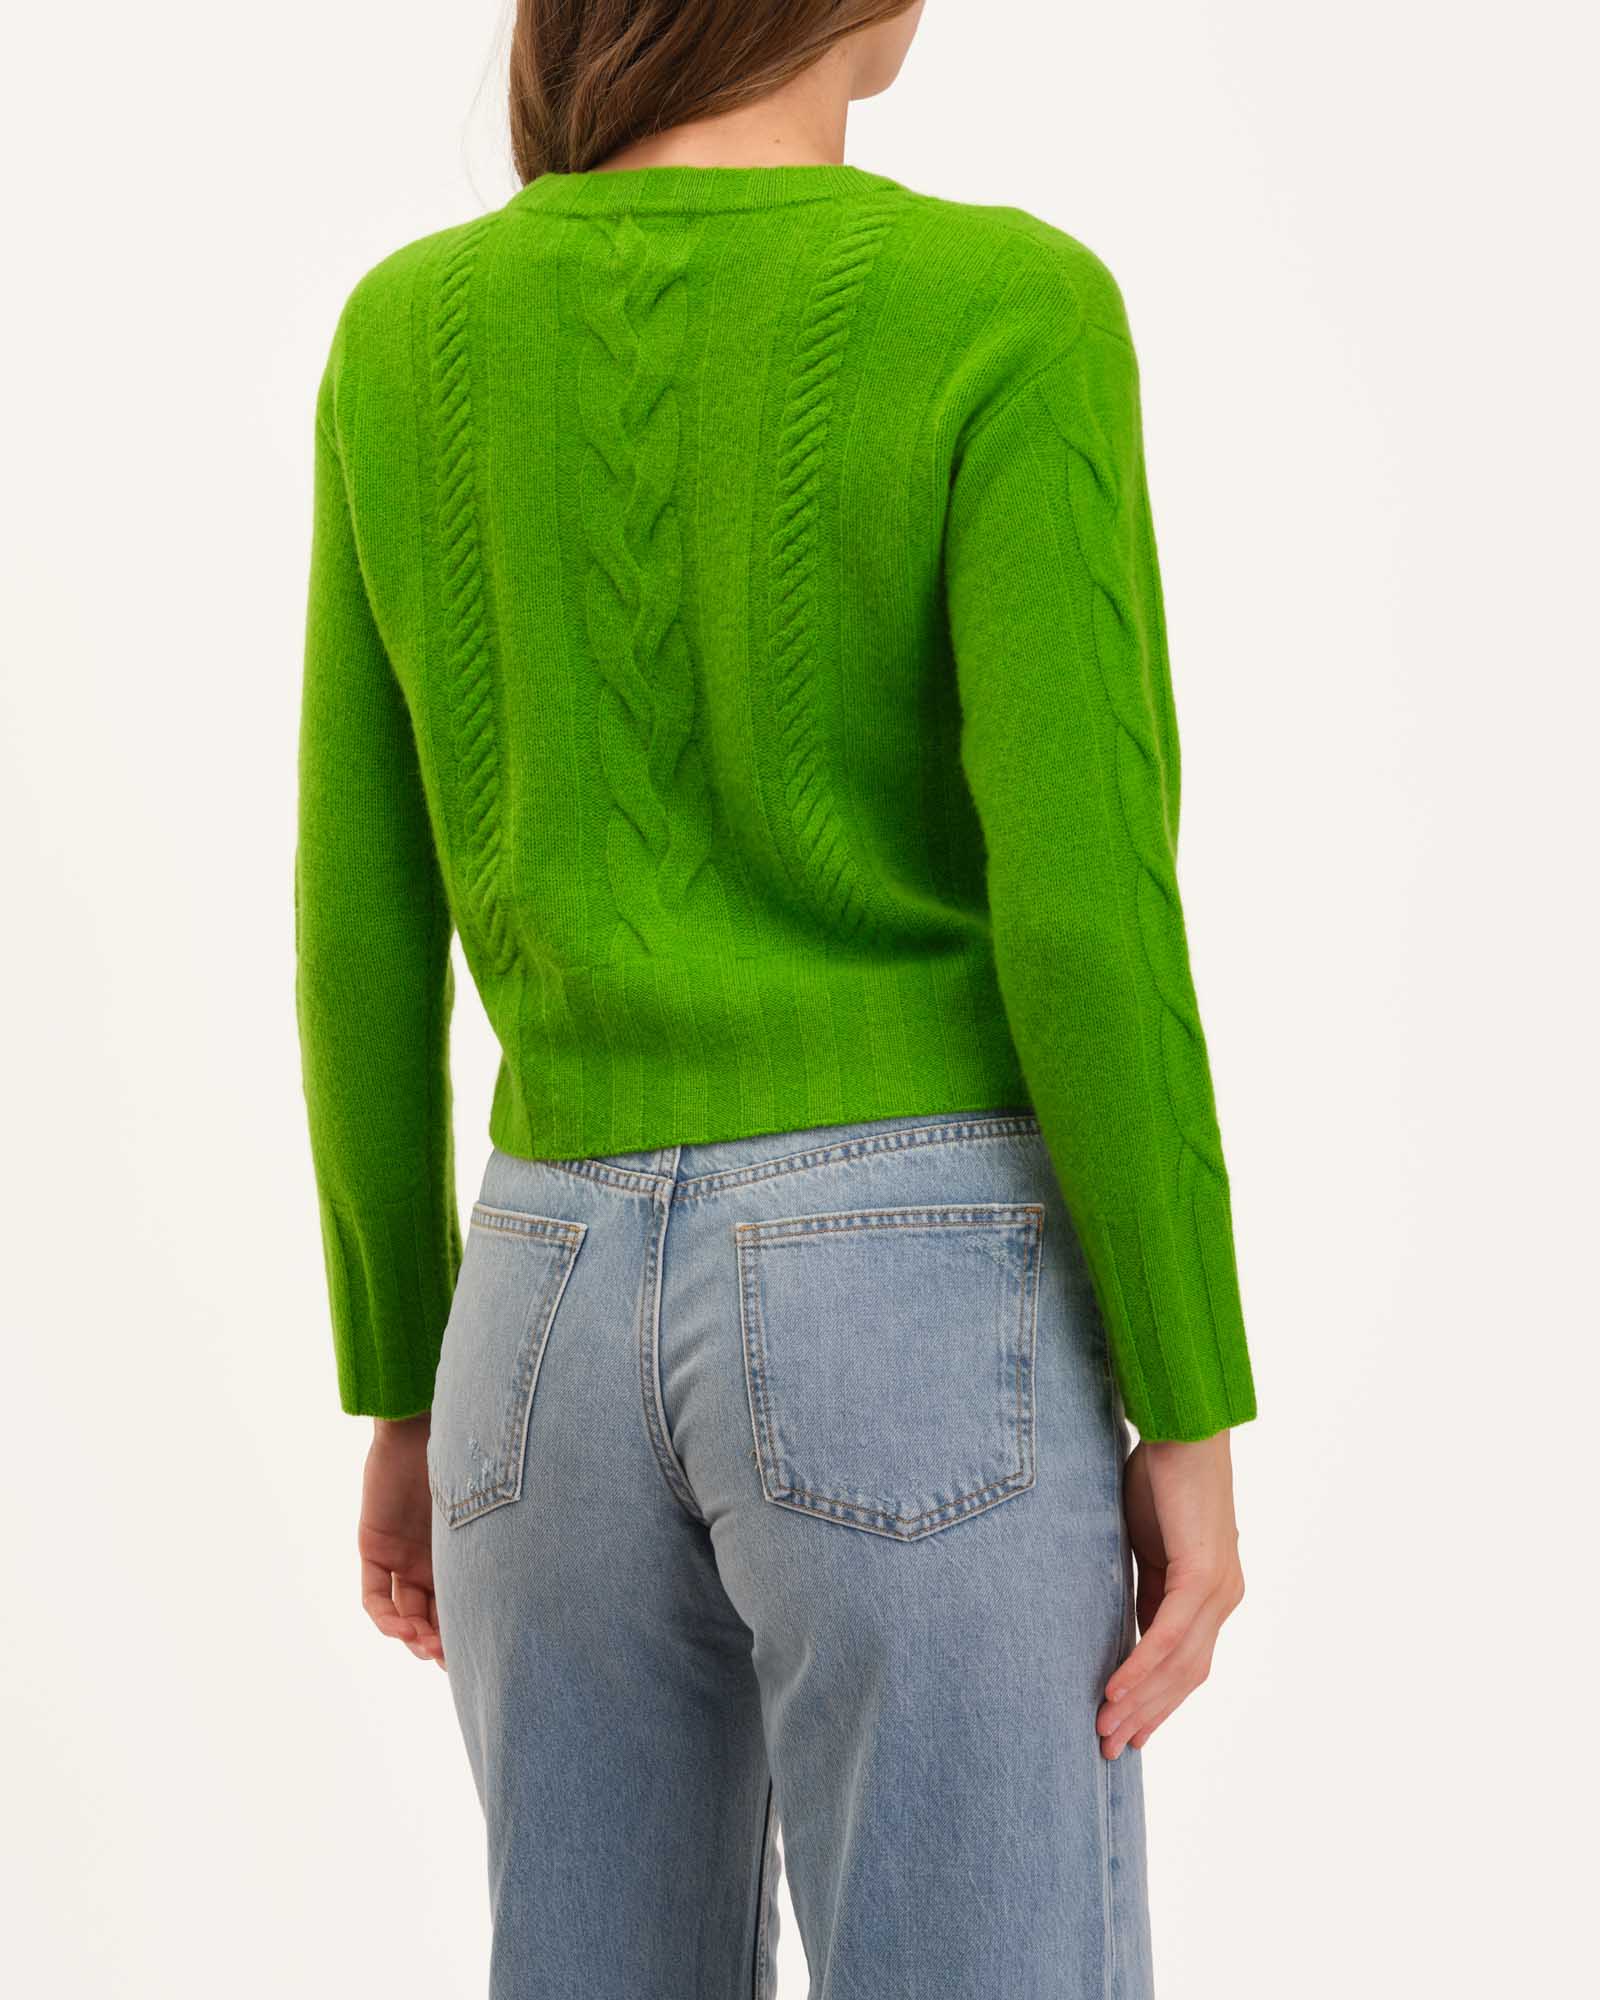 Shop Cashmere Cable Crew Neck Sweater | Elie Elie Tahari | JANE + MERCER